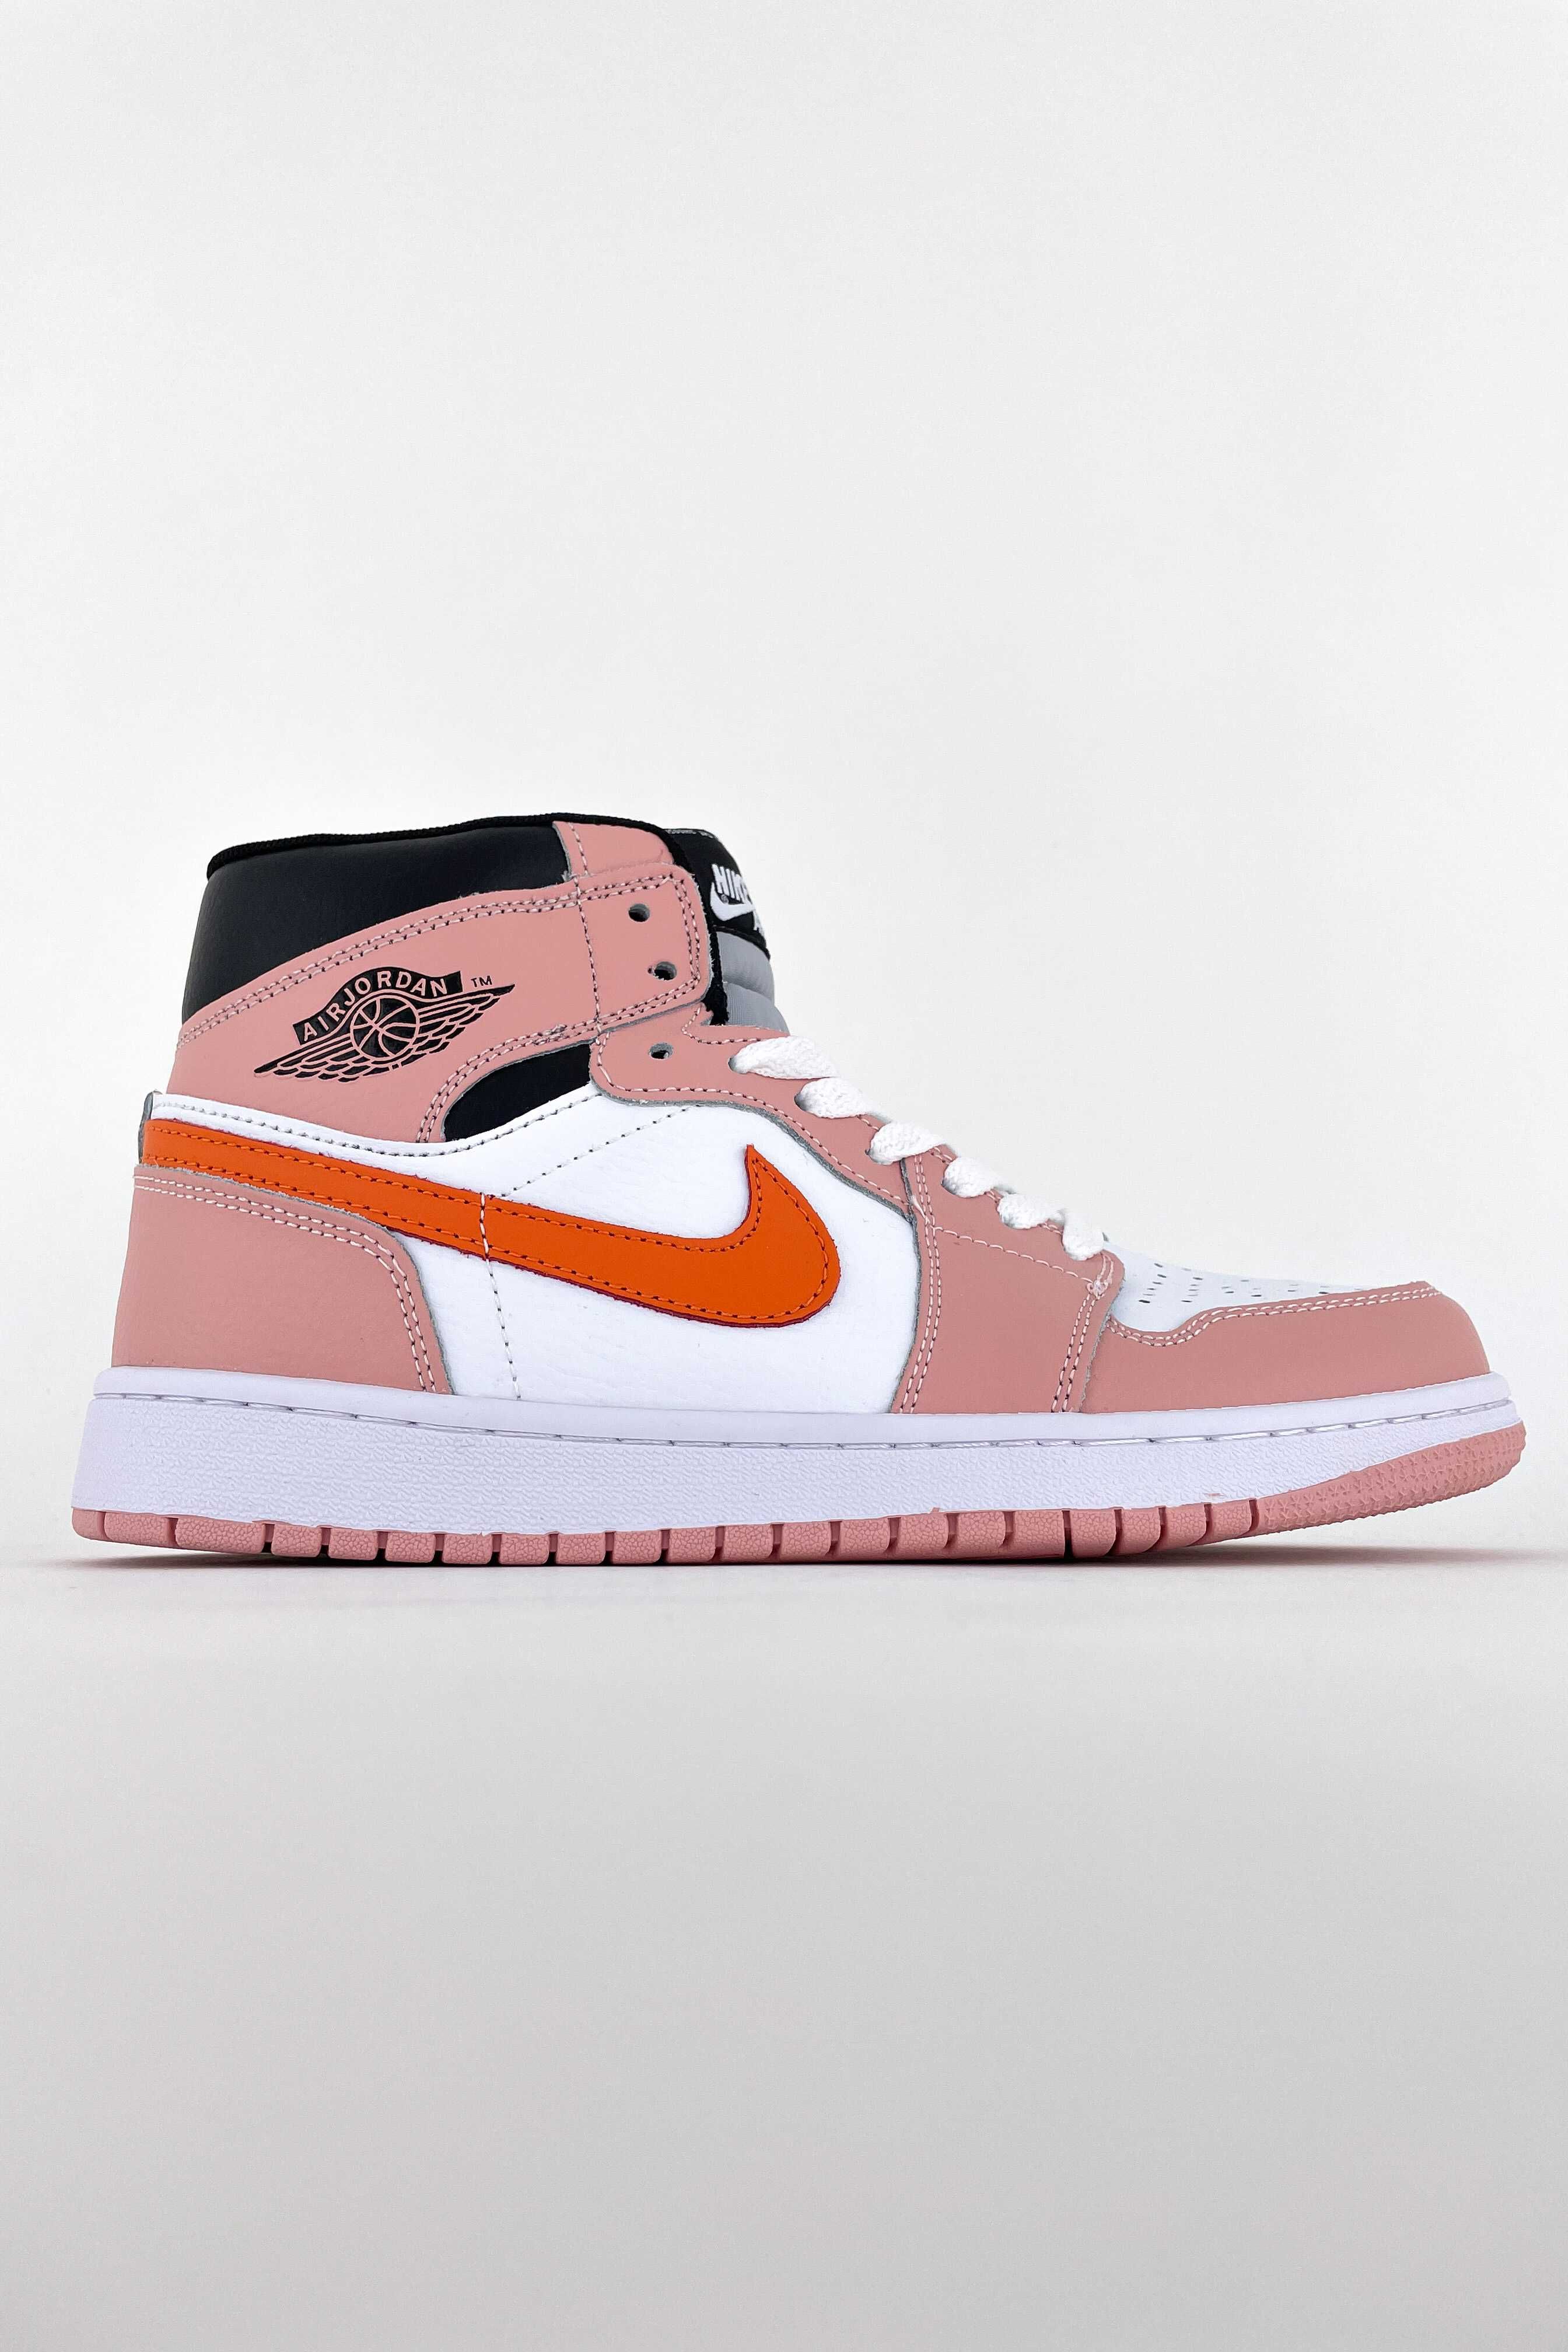 Nike Air Jordan 1 Retro Pink Orange